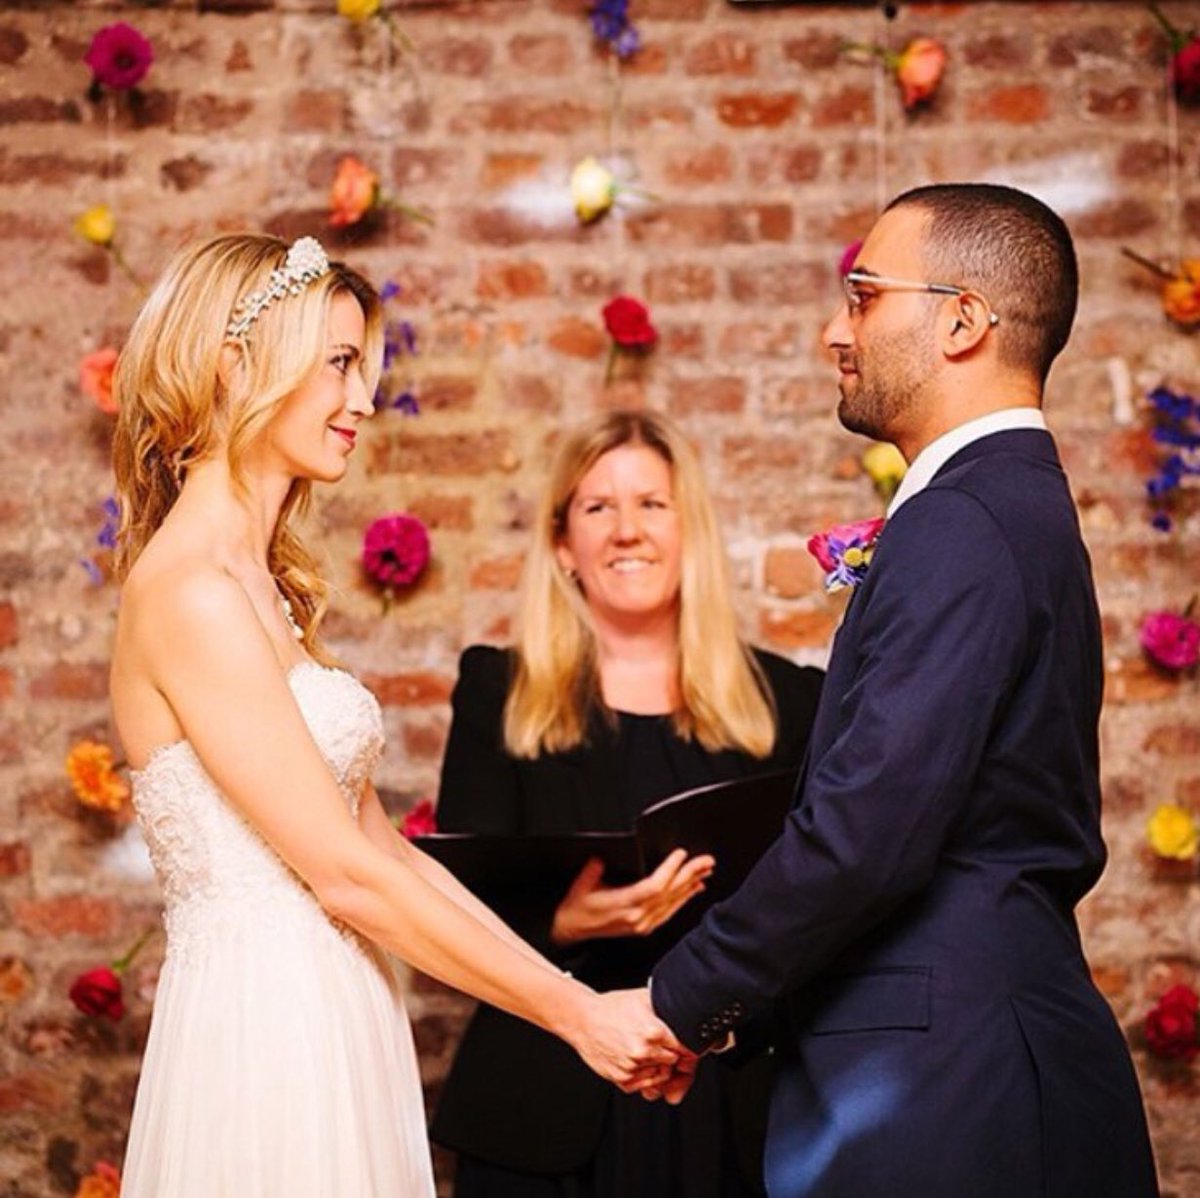 Celebrating #WeddingWednesday with this lovely image from @rsahouse @RSAWeddings @hayleysavphoto @chandco @LoveMyDressBlog @bridebook @BrideMag @AceWeddingsuk @barberellahair @natweddingsmag #eventprofs #recentlyengaged #londonweddingvenue